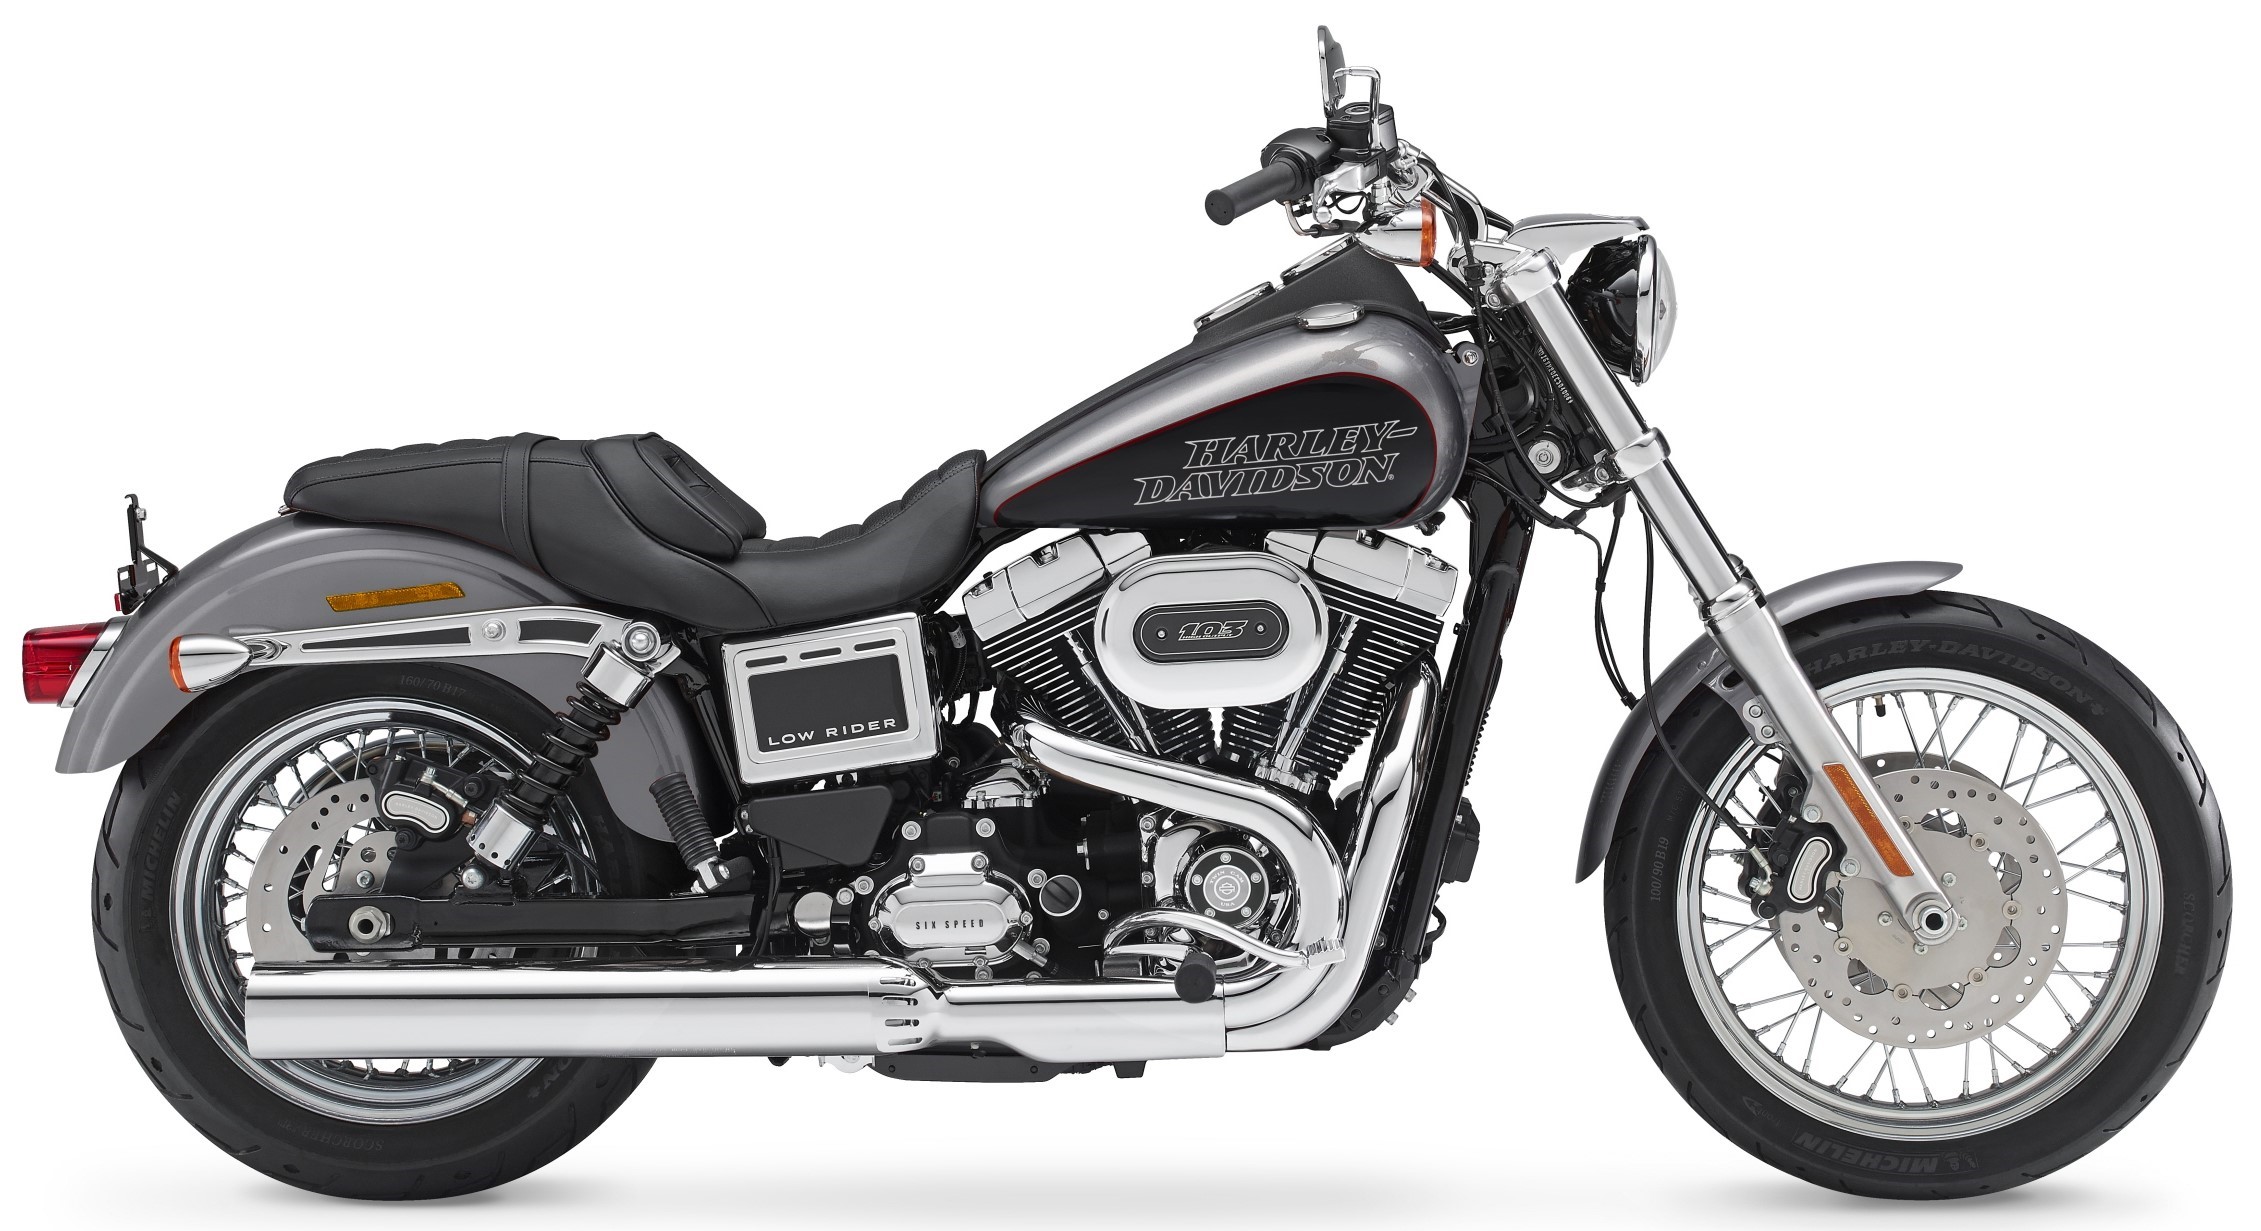 Harley Davidson Fxdl Low Rider Bikes For Sale The Bike Market